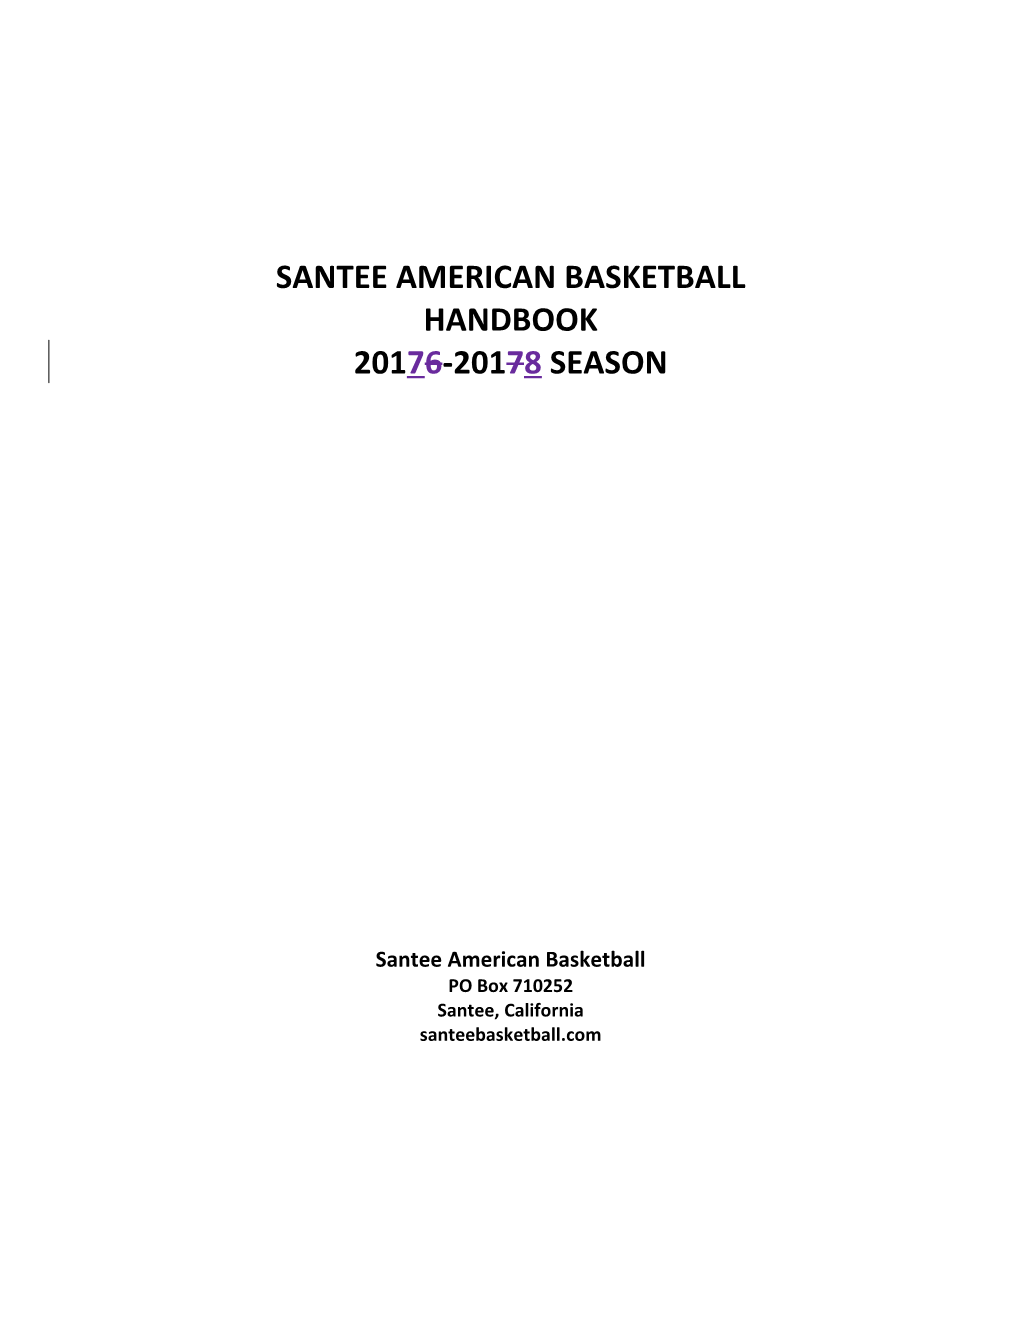 Santee American Basketball